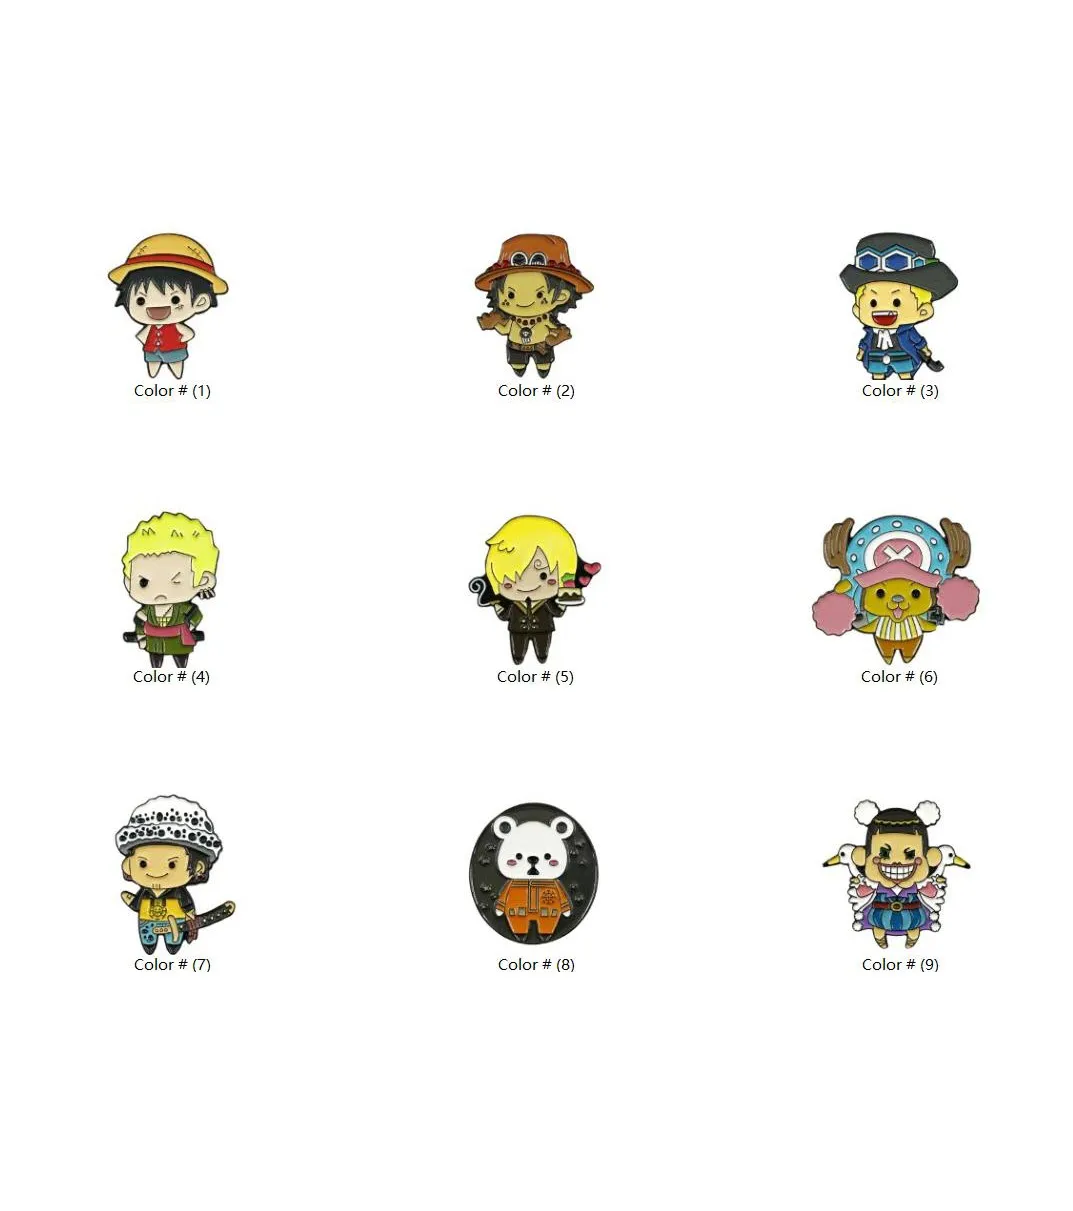 Anime One Piece Characters Vs Sanji Pin Unisex